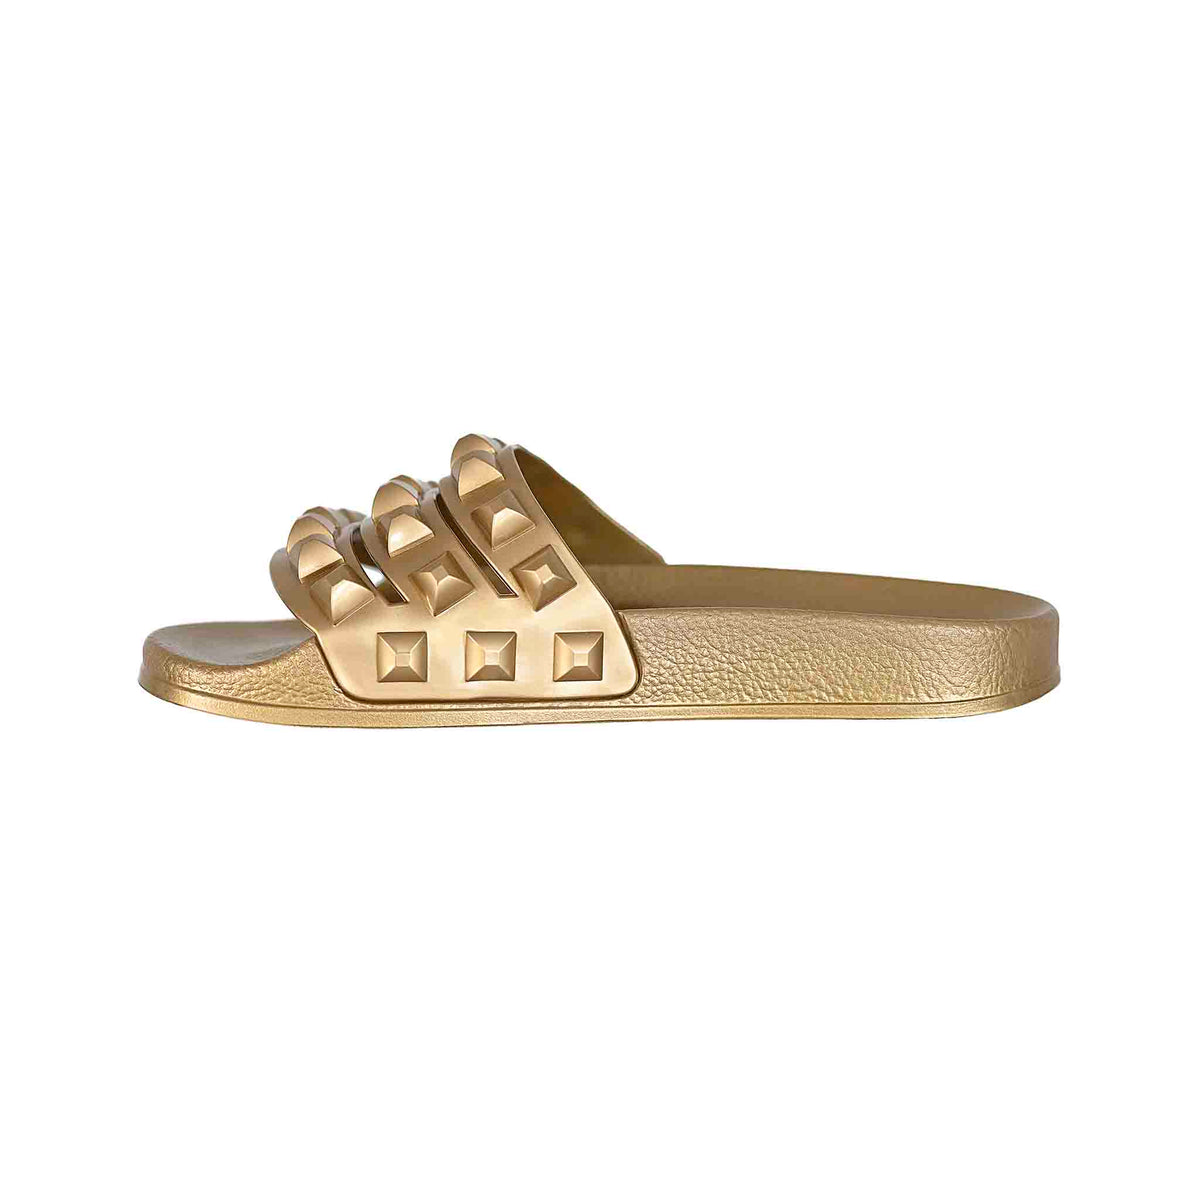 Gold platform slide sandals for women perfect street look from carmen sol